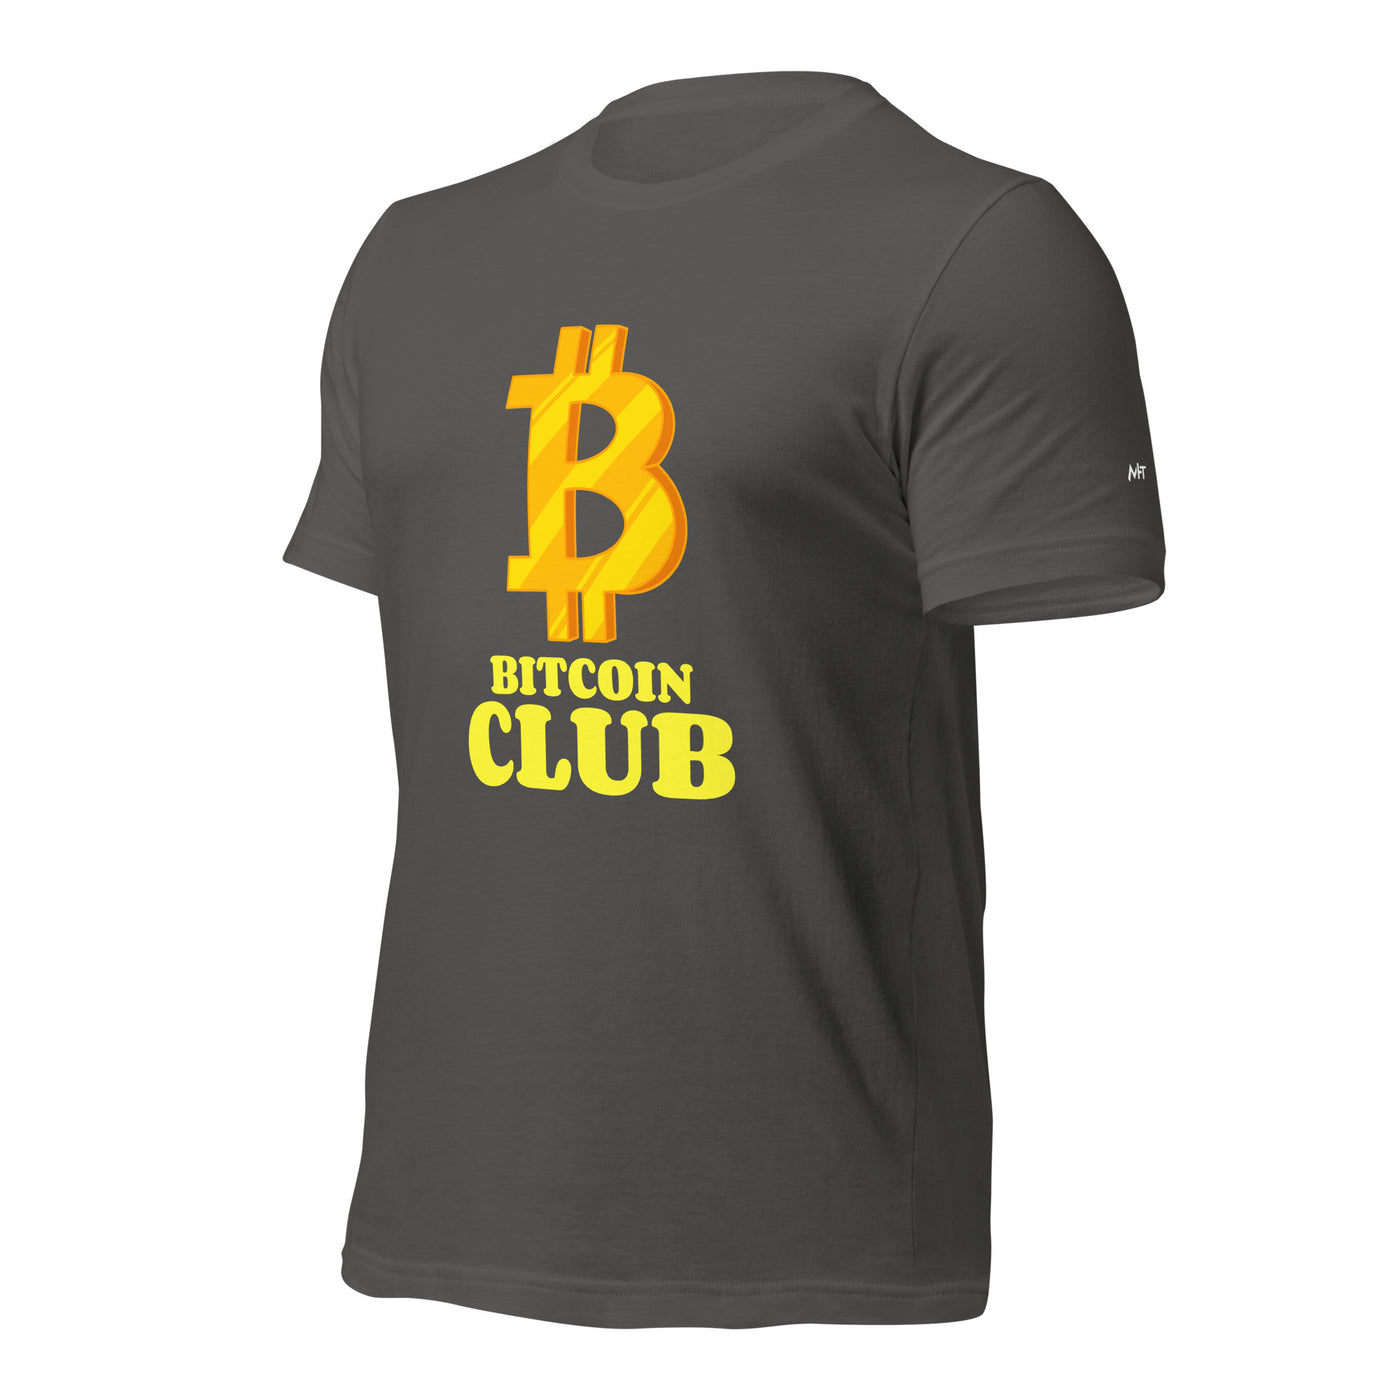 BITCOIN CLUB V5 - Unisex t-shirt